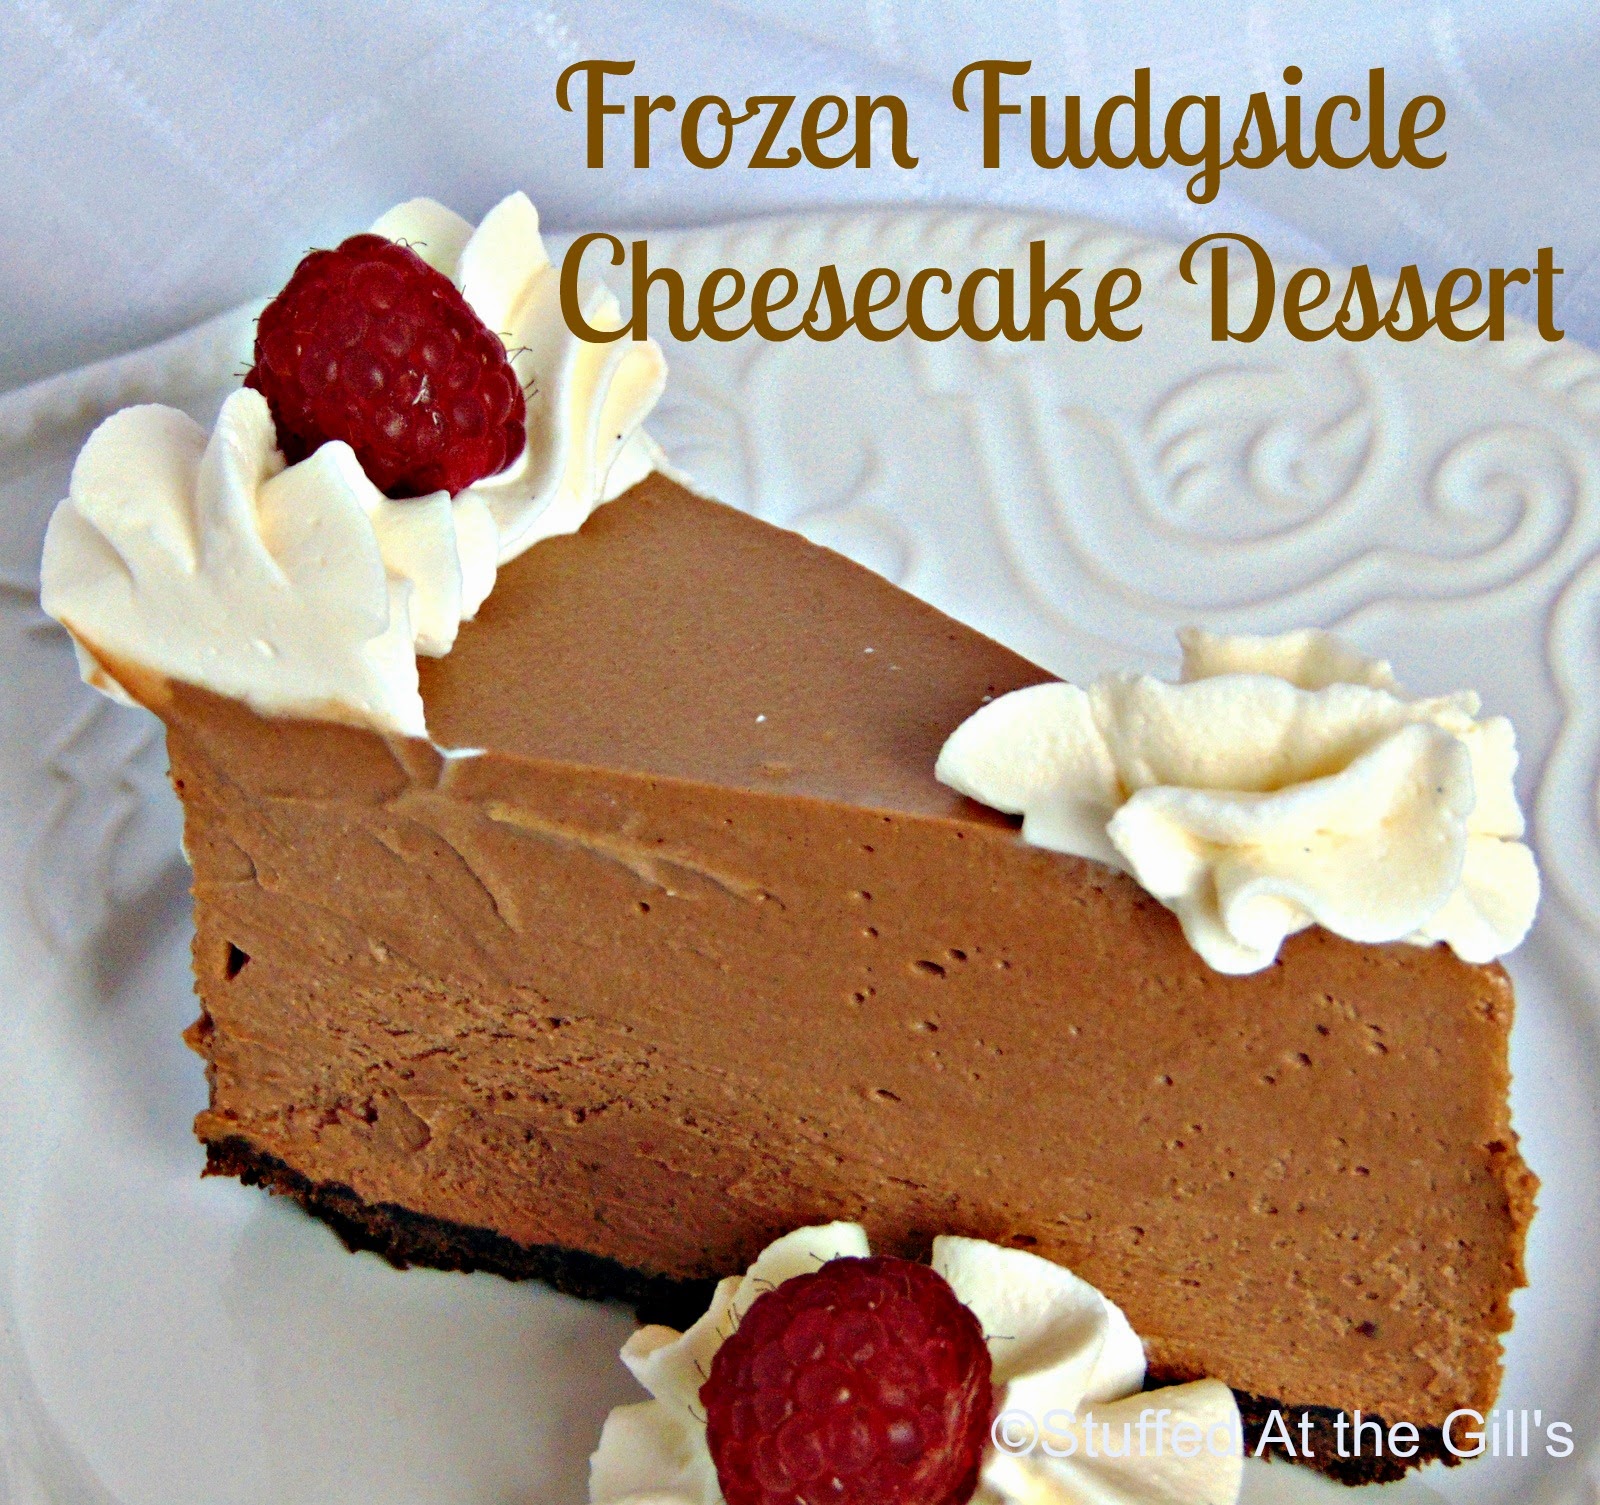 Frozen Fudgsicle Cheesecake Dessert